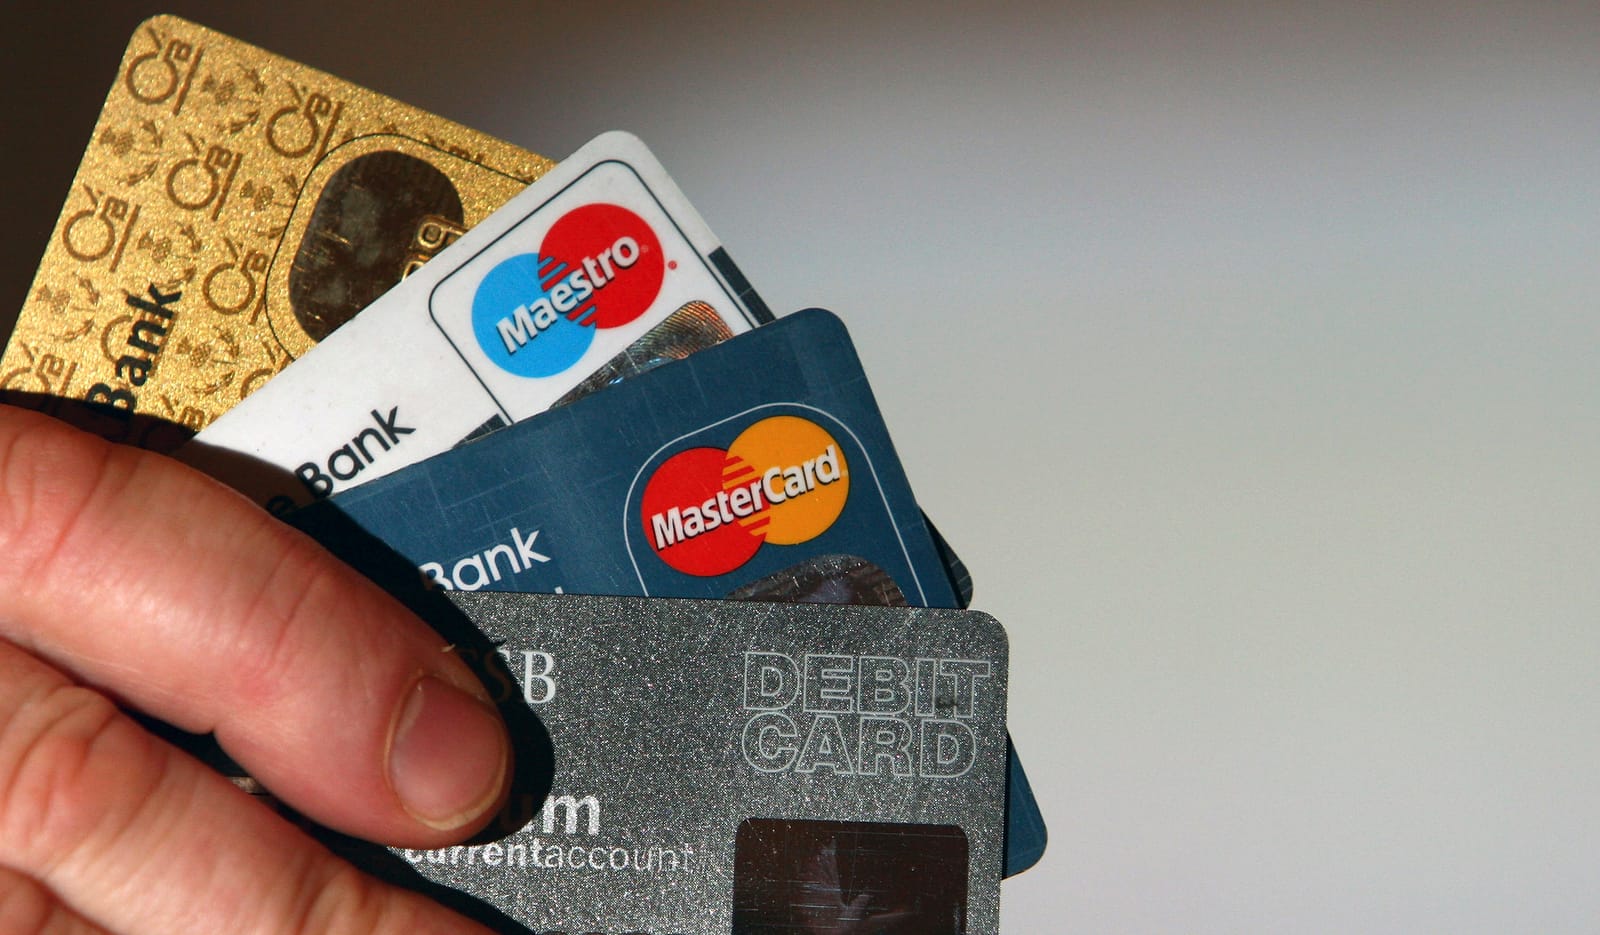 Credit card gambling ban comes into force